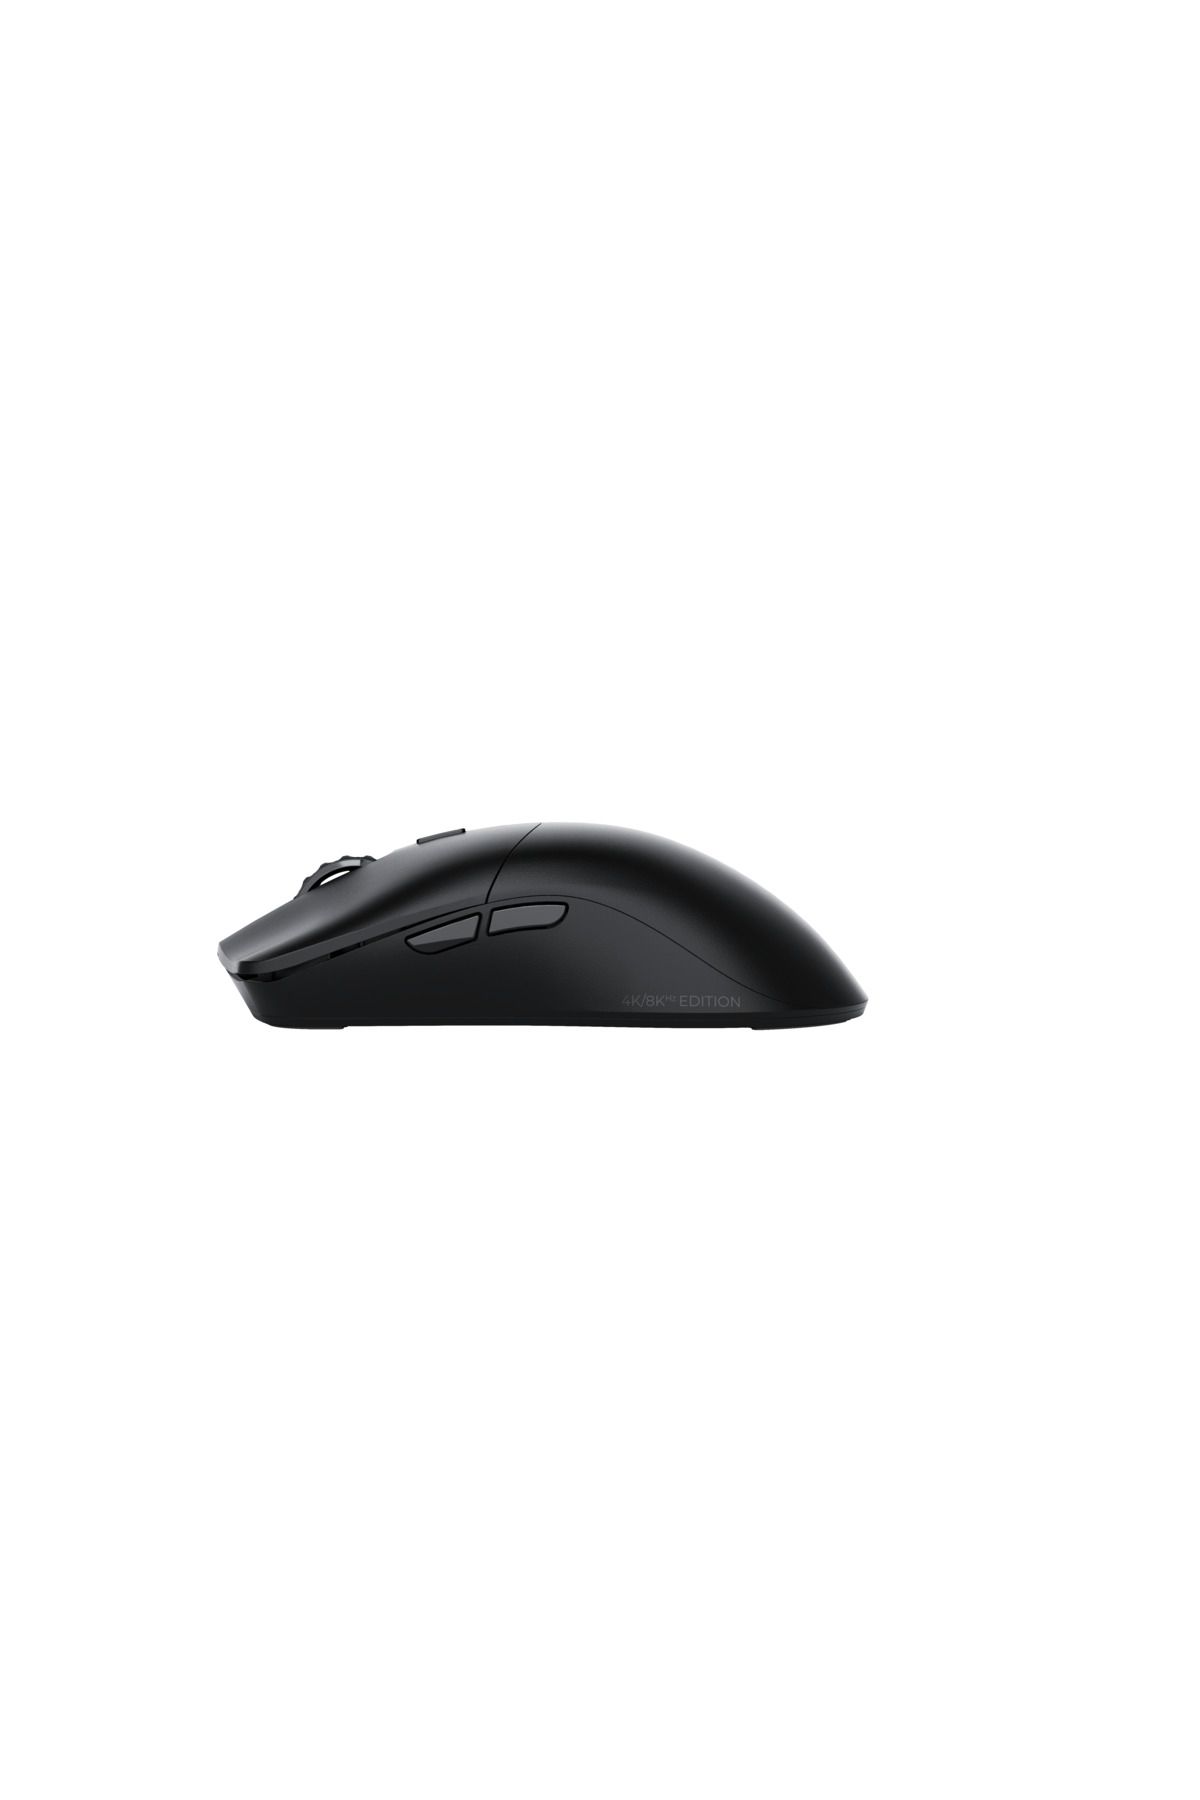 Glorious Model O 2 PRO 4K/8K Polling Siyah Kablosuz RGB Oyuncu Mouse